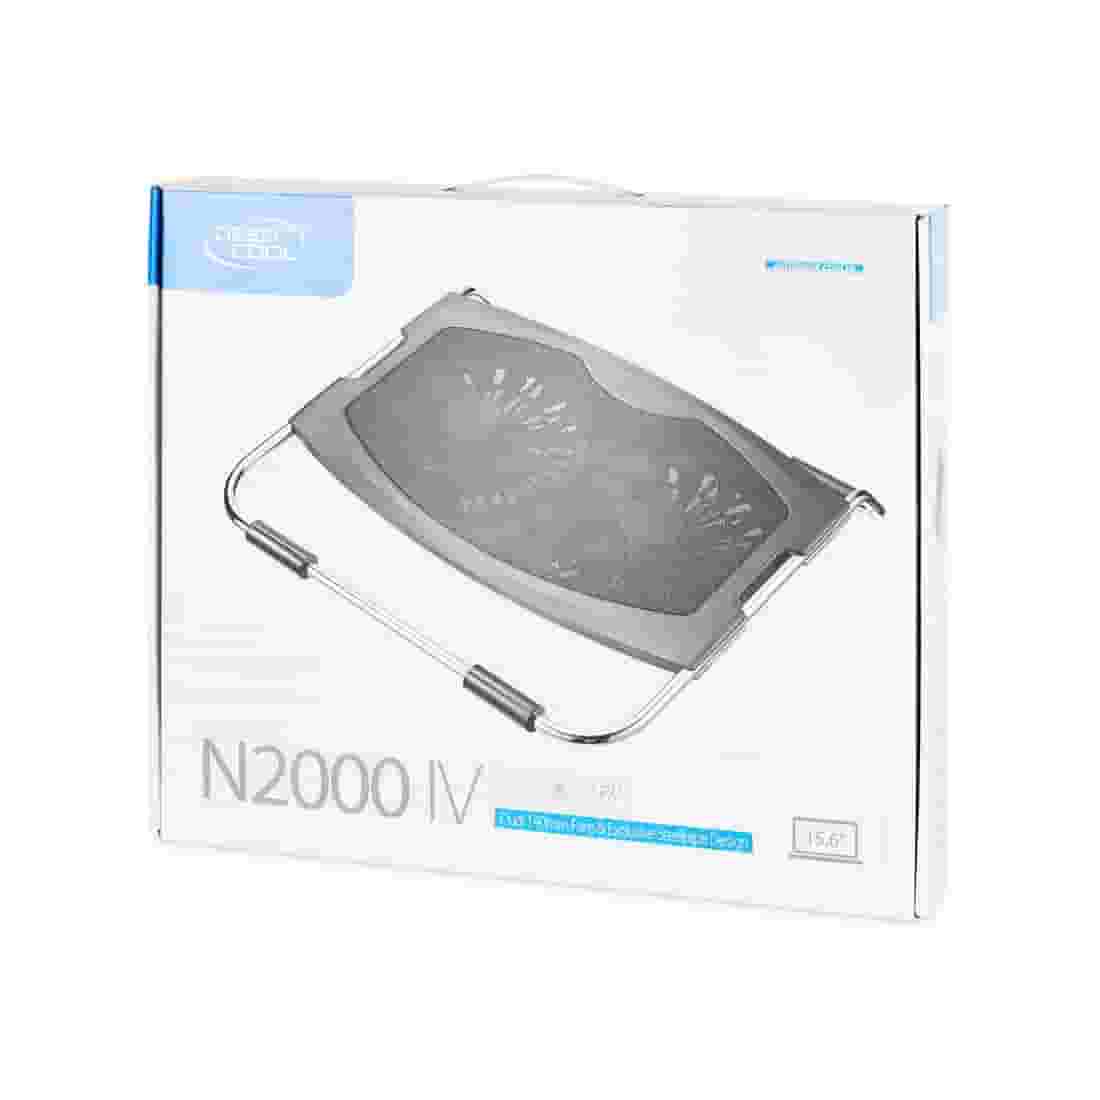 Deepcool N2000 IV Охлаждающая подставка для ноутбука-1